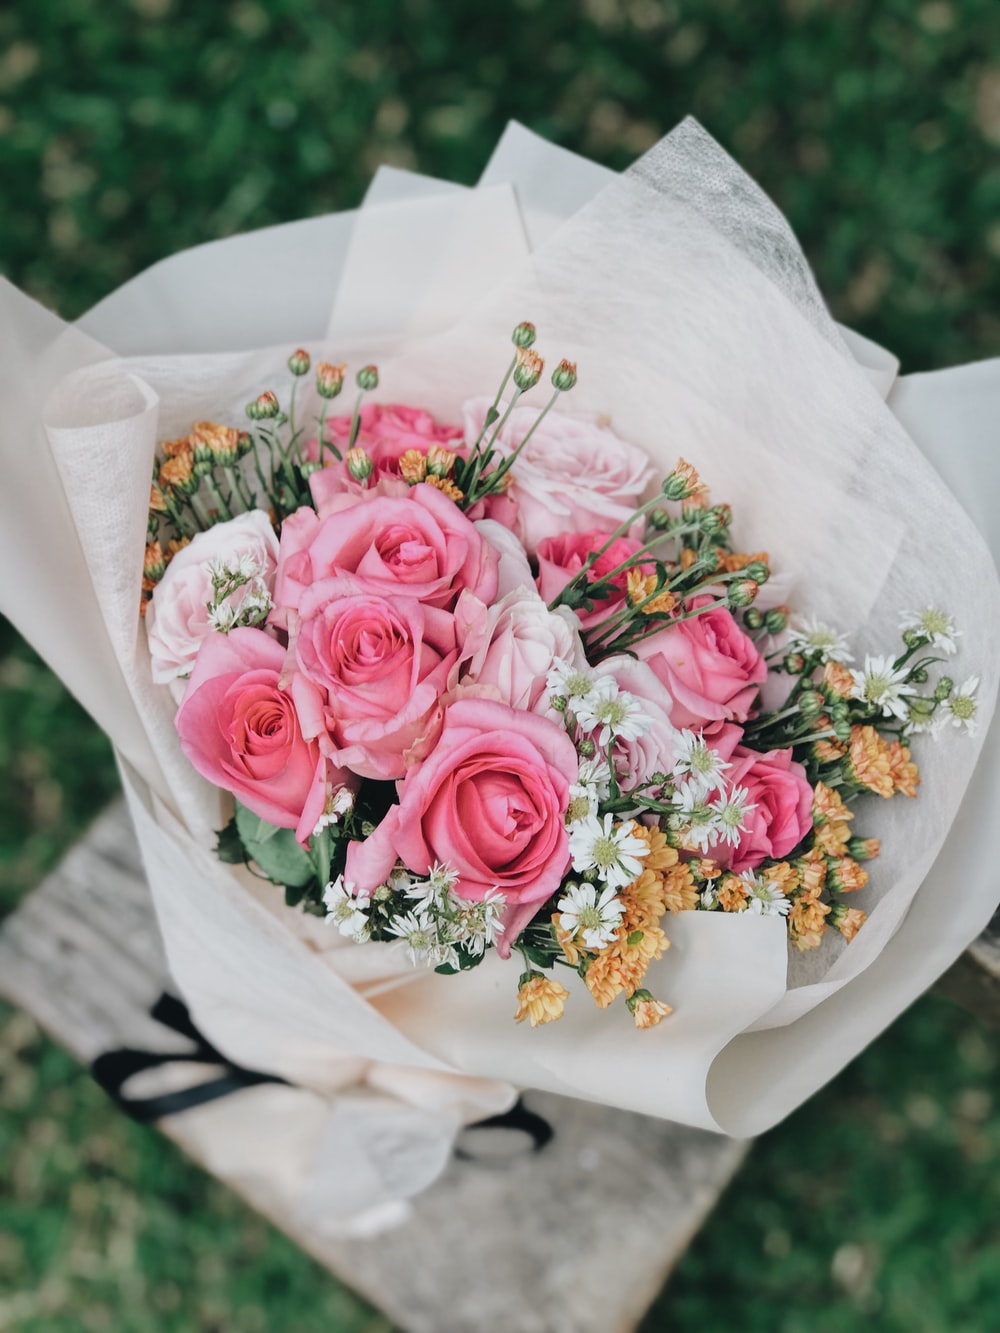 Pics Of Bouquets Of Flowers - KibrisPDR